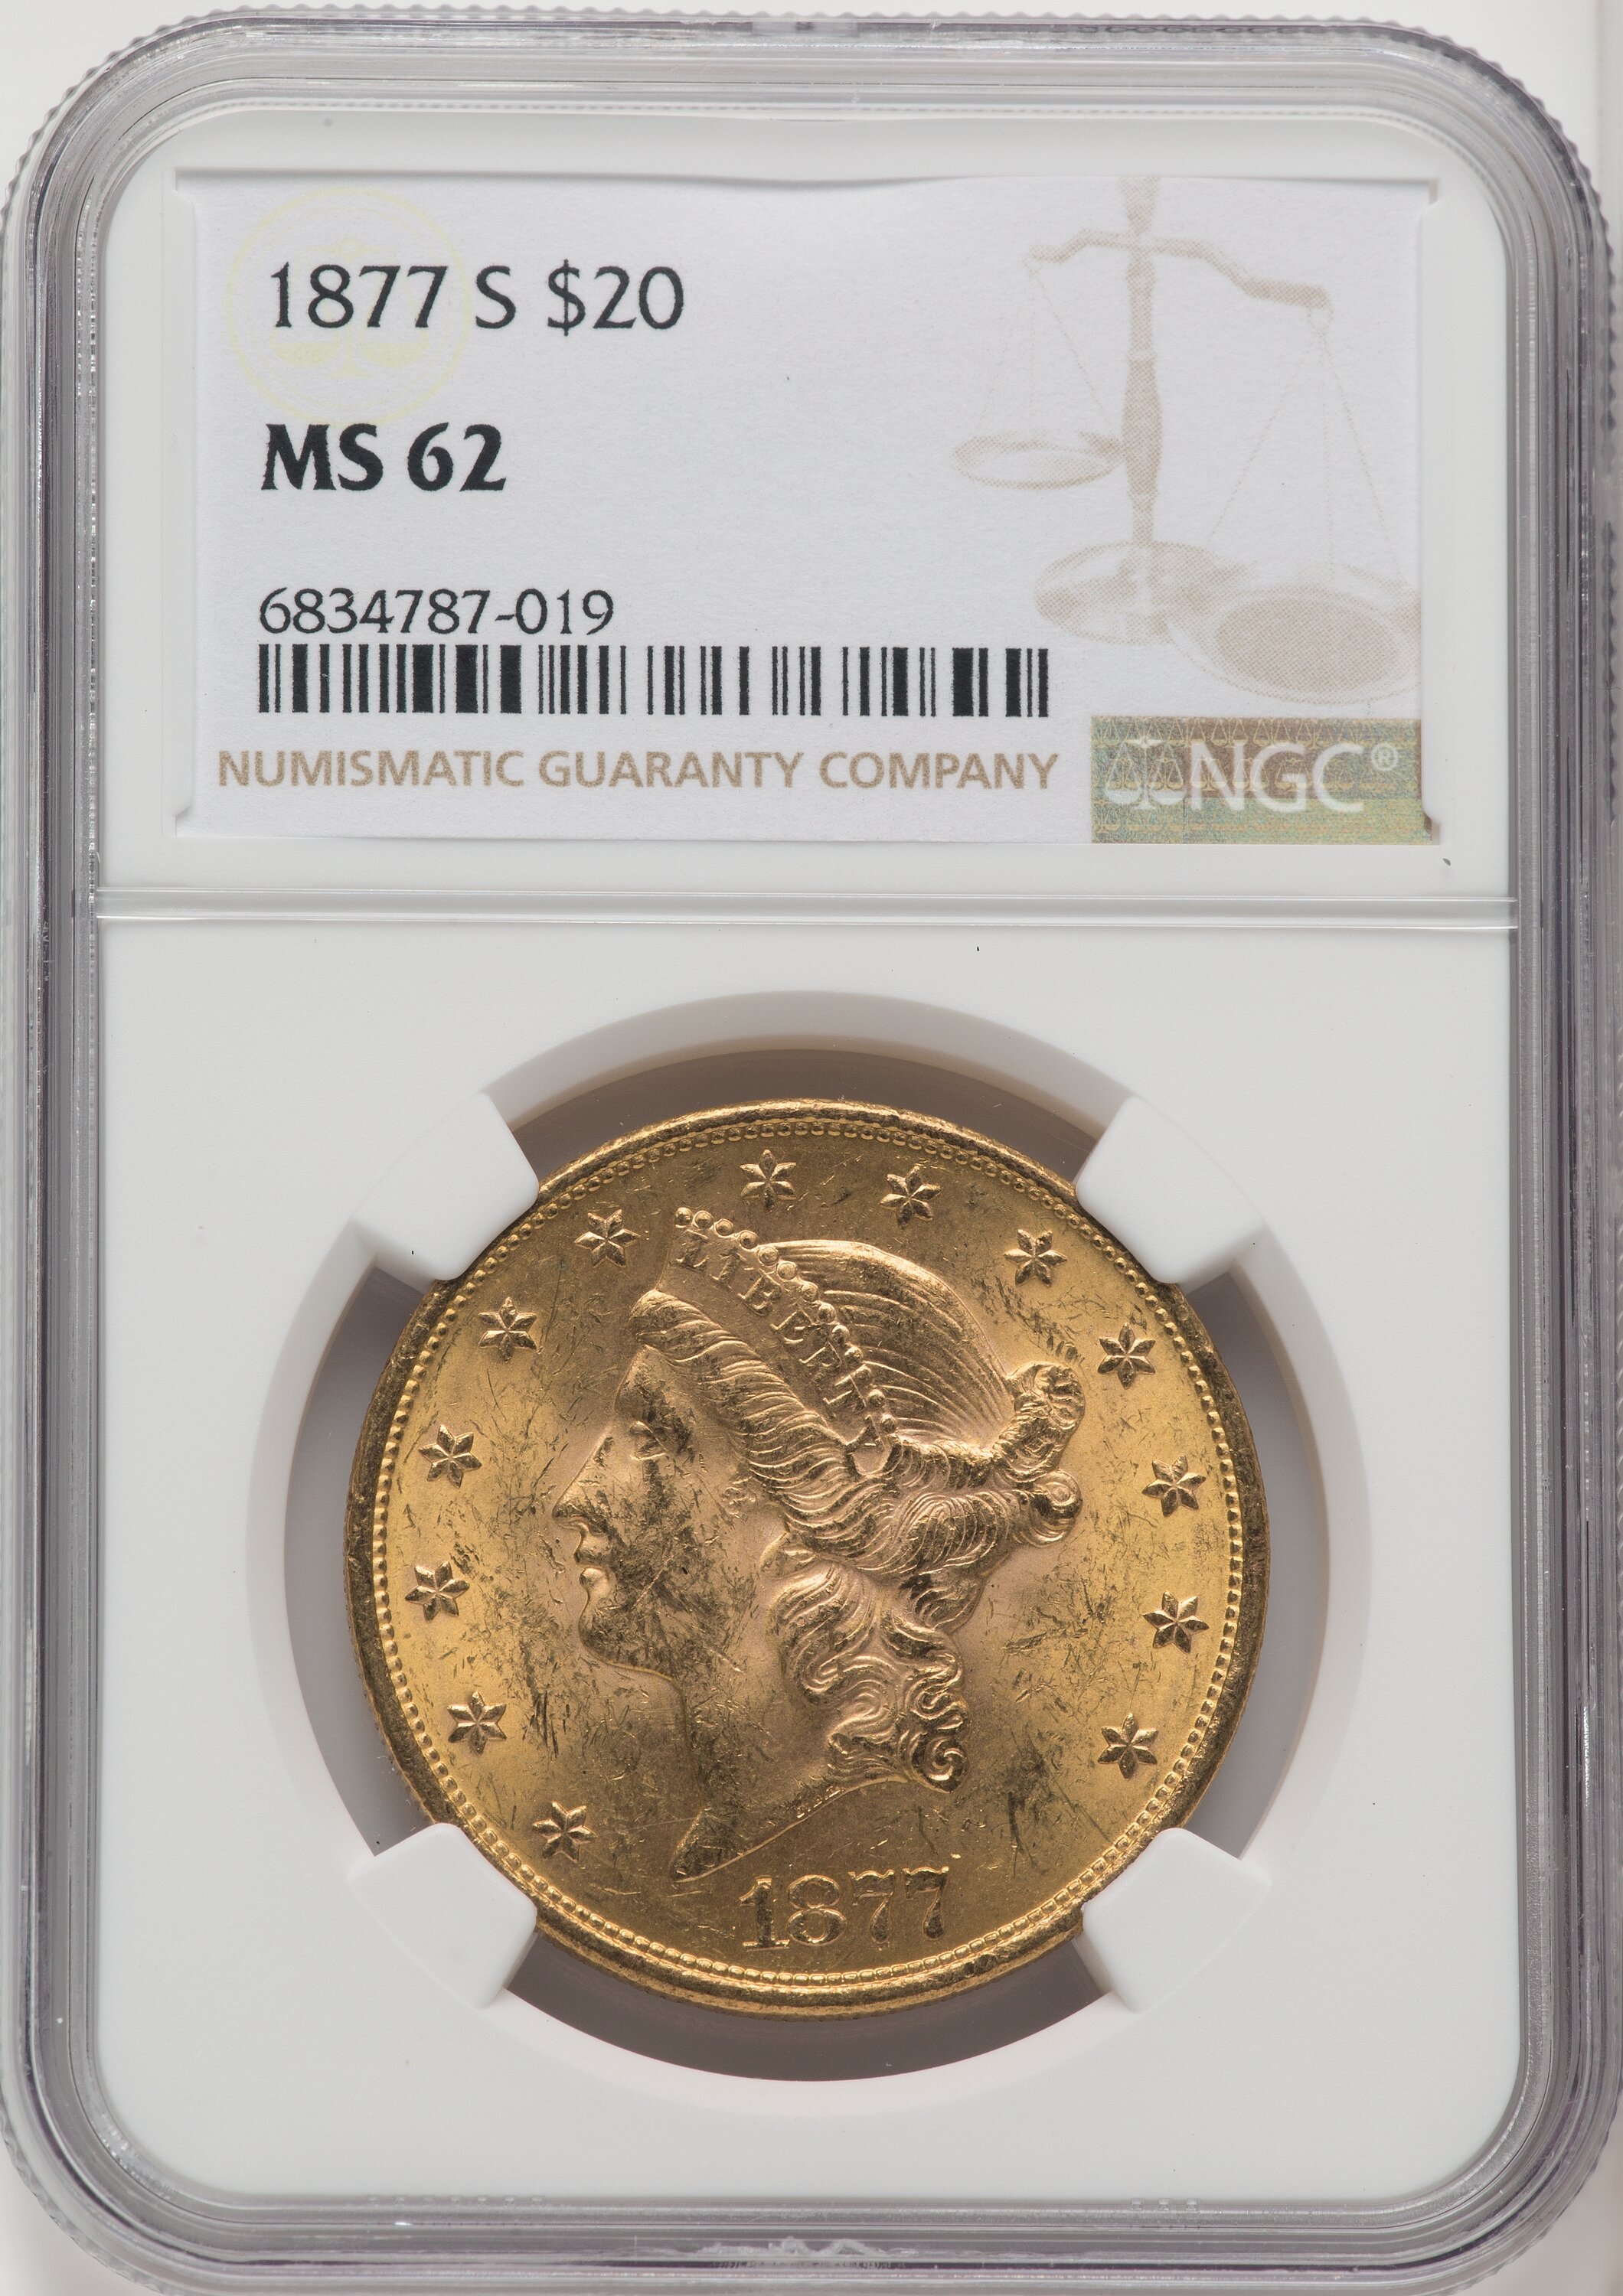 1877-S $20 62 NGC